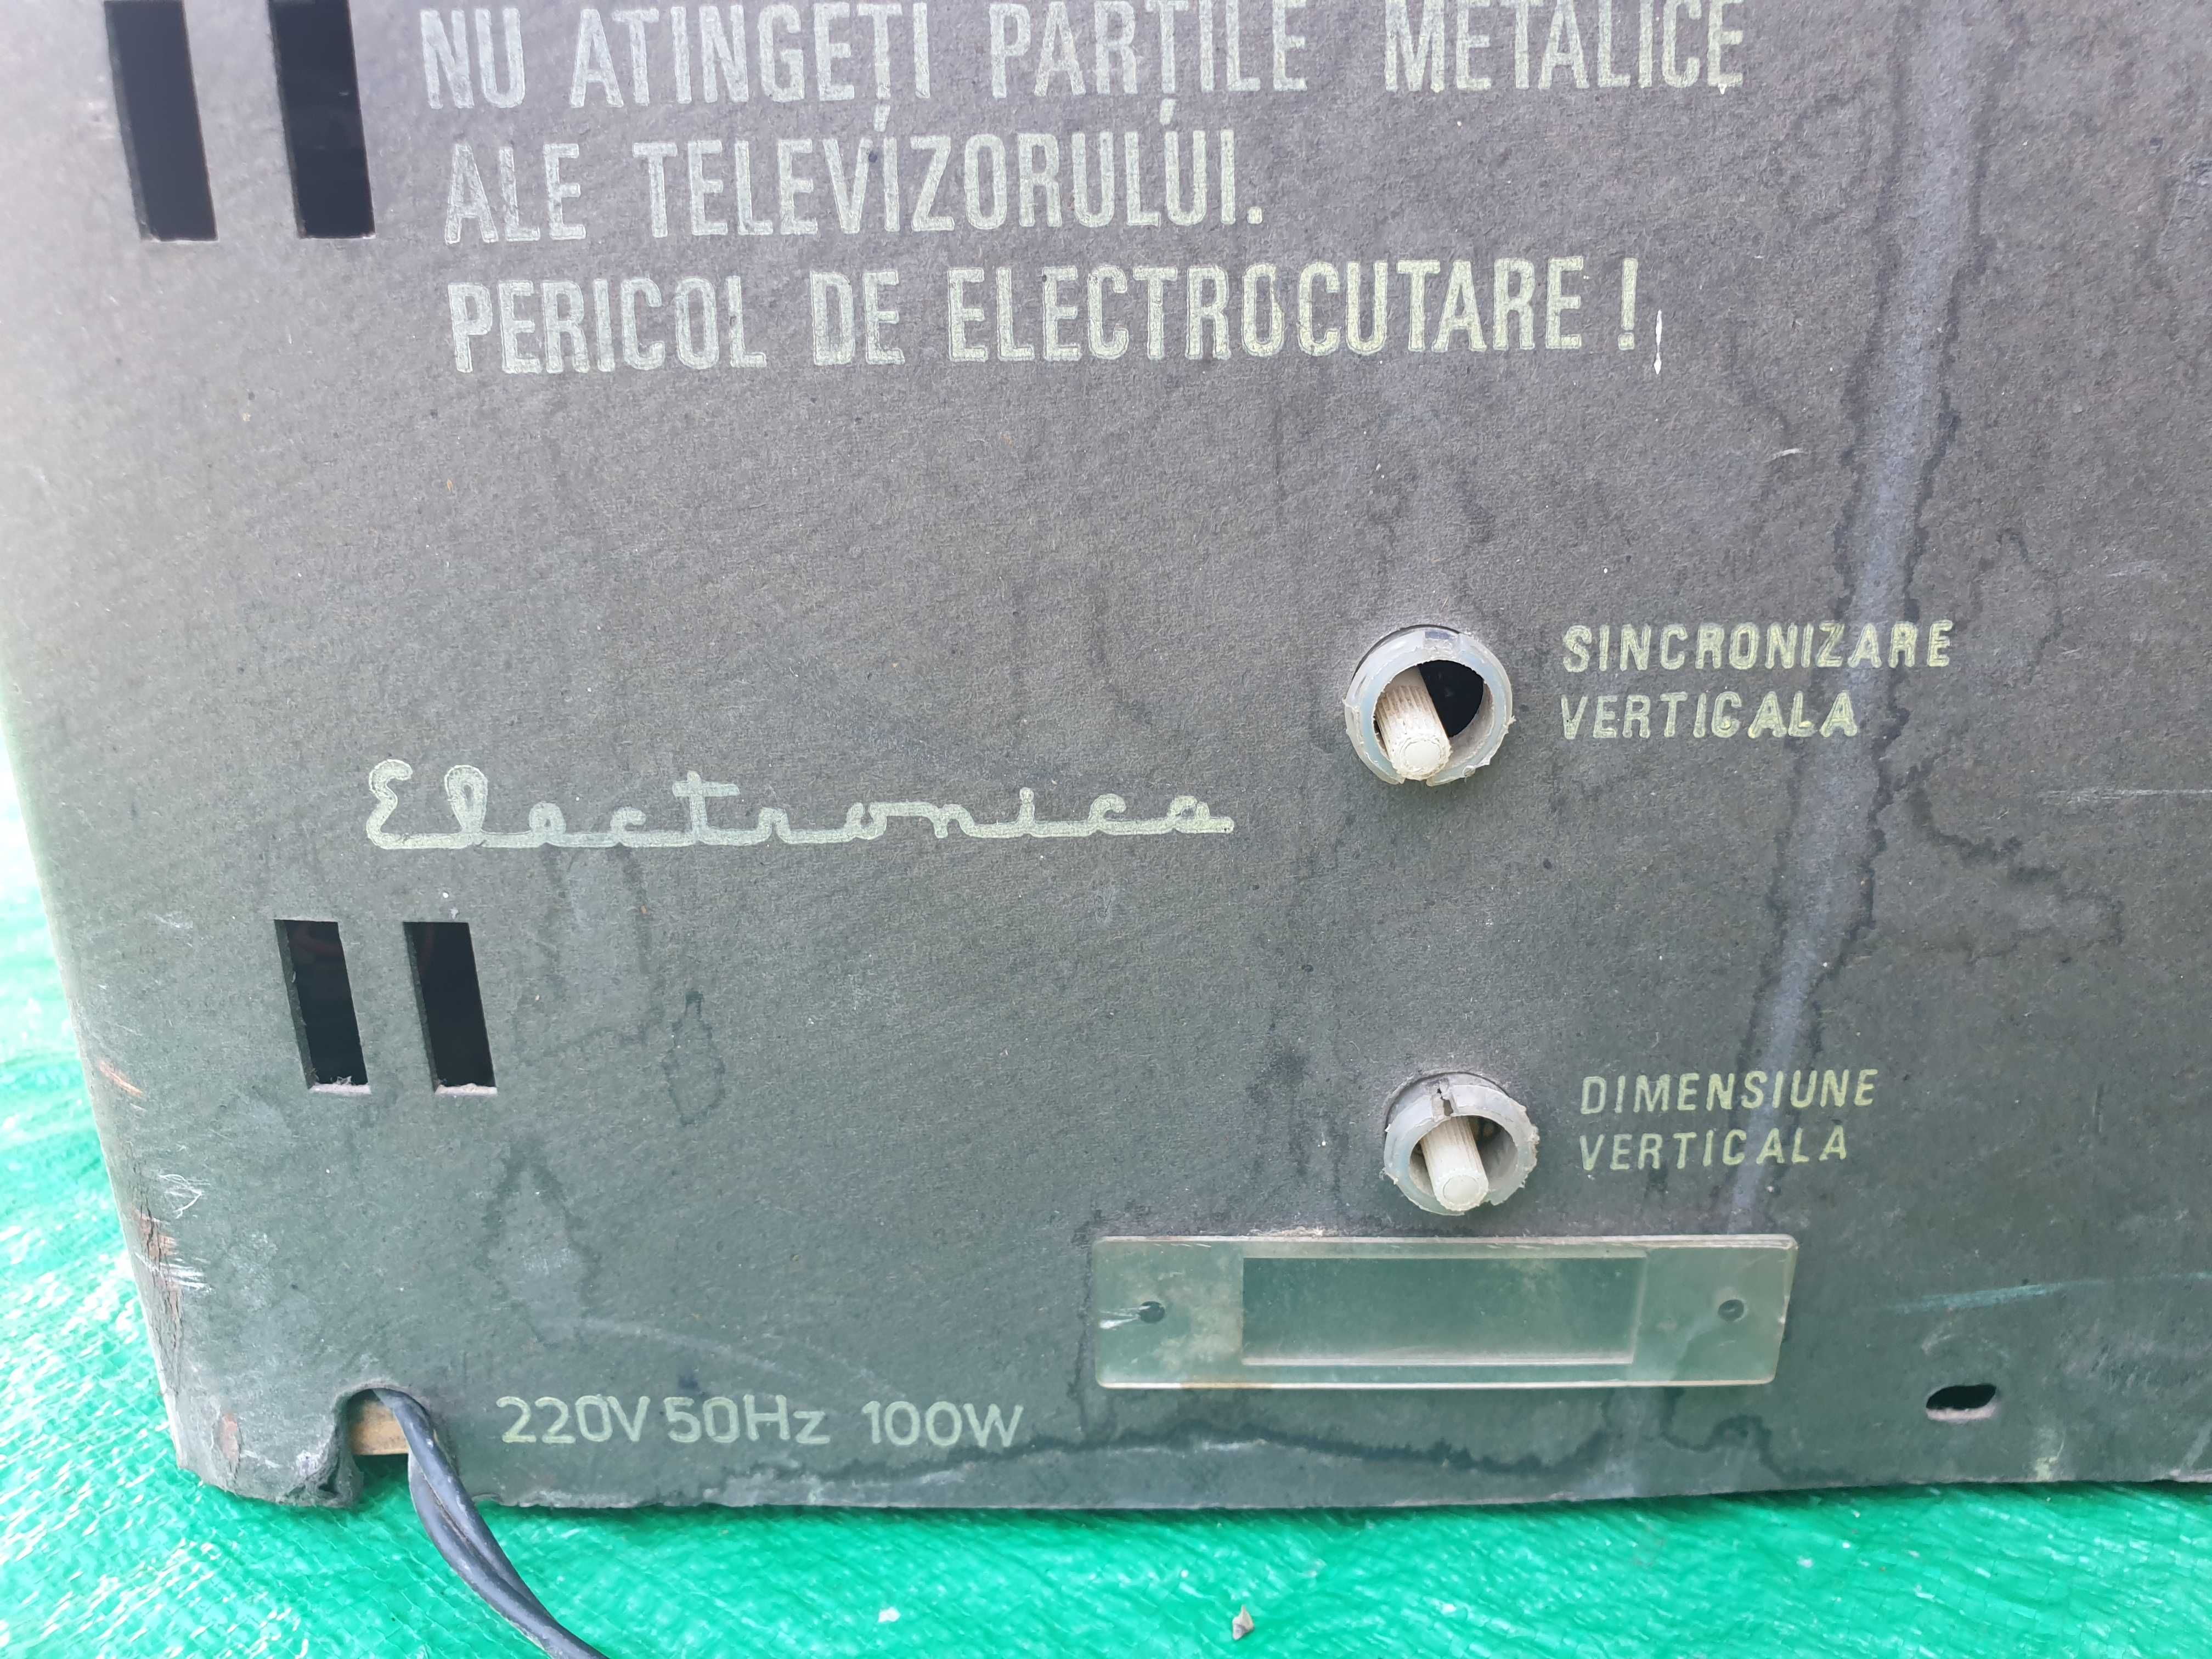 TELEVIZOR Olt model 268,fabricat in ani '80 la ELECTRONICA in comunism